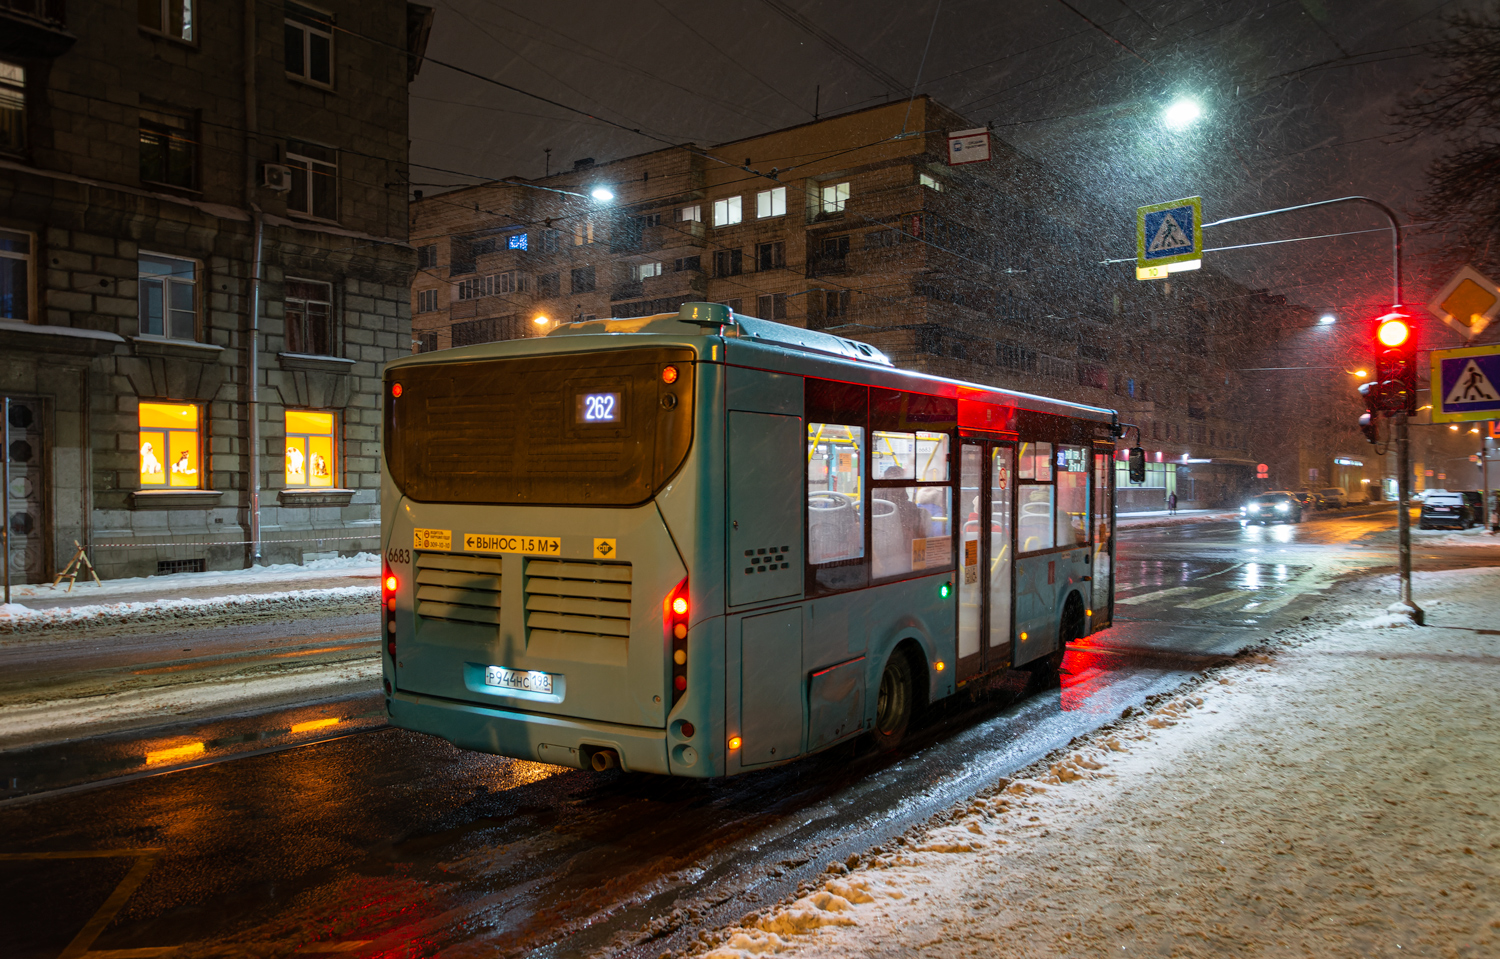 Sankt Petersburg, Volgabus-4298.G4 (LNG) Nr. 6683